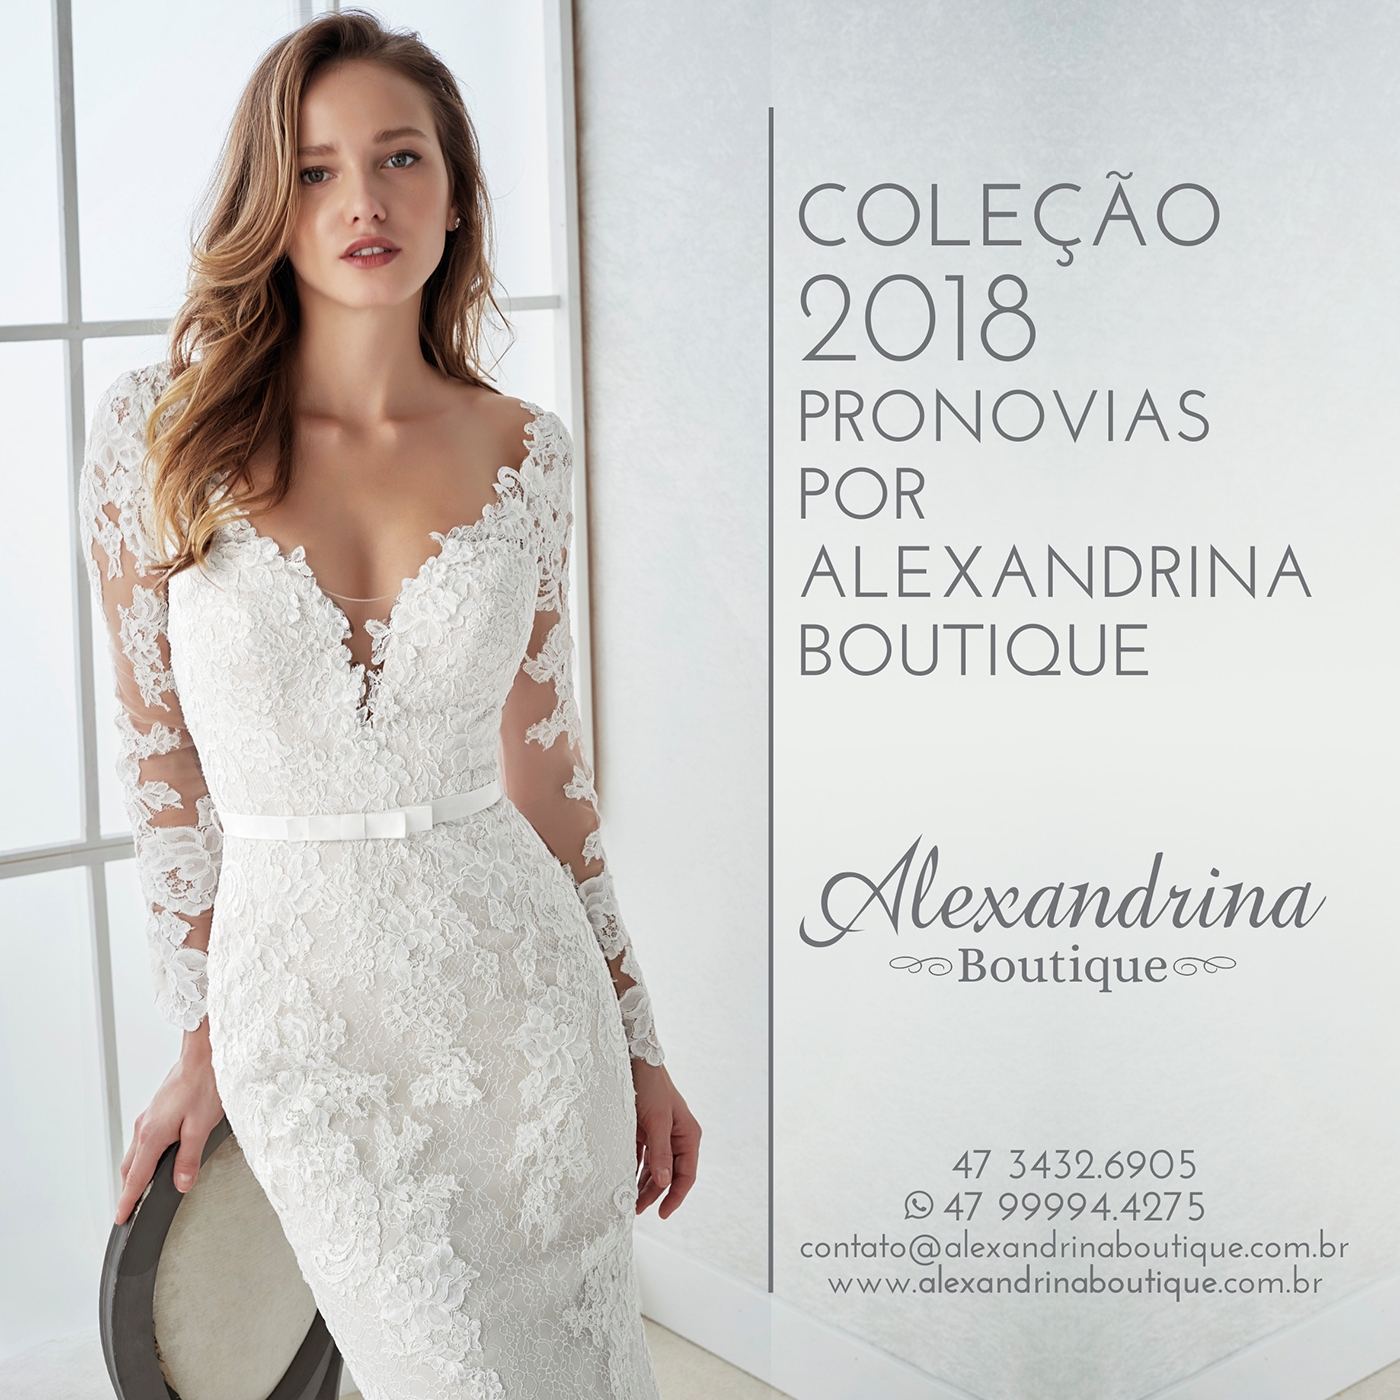 graphic design  Fashion  bride WEDDING DRESS wedding flyer social media Advertising  campaign Collection